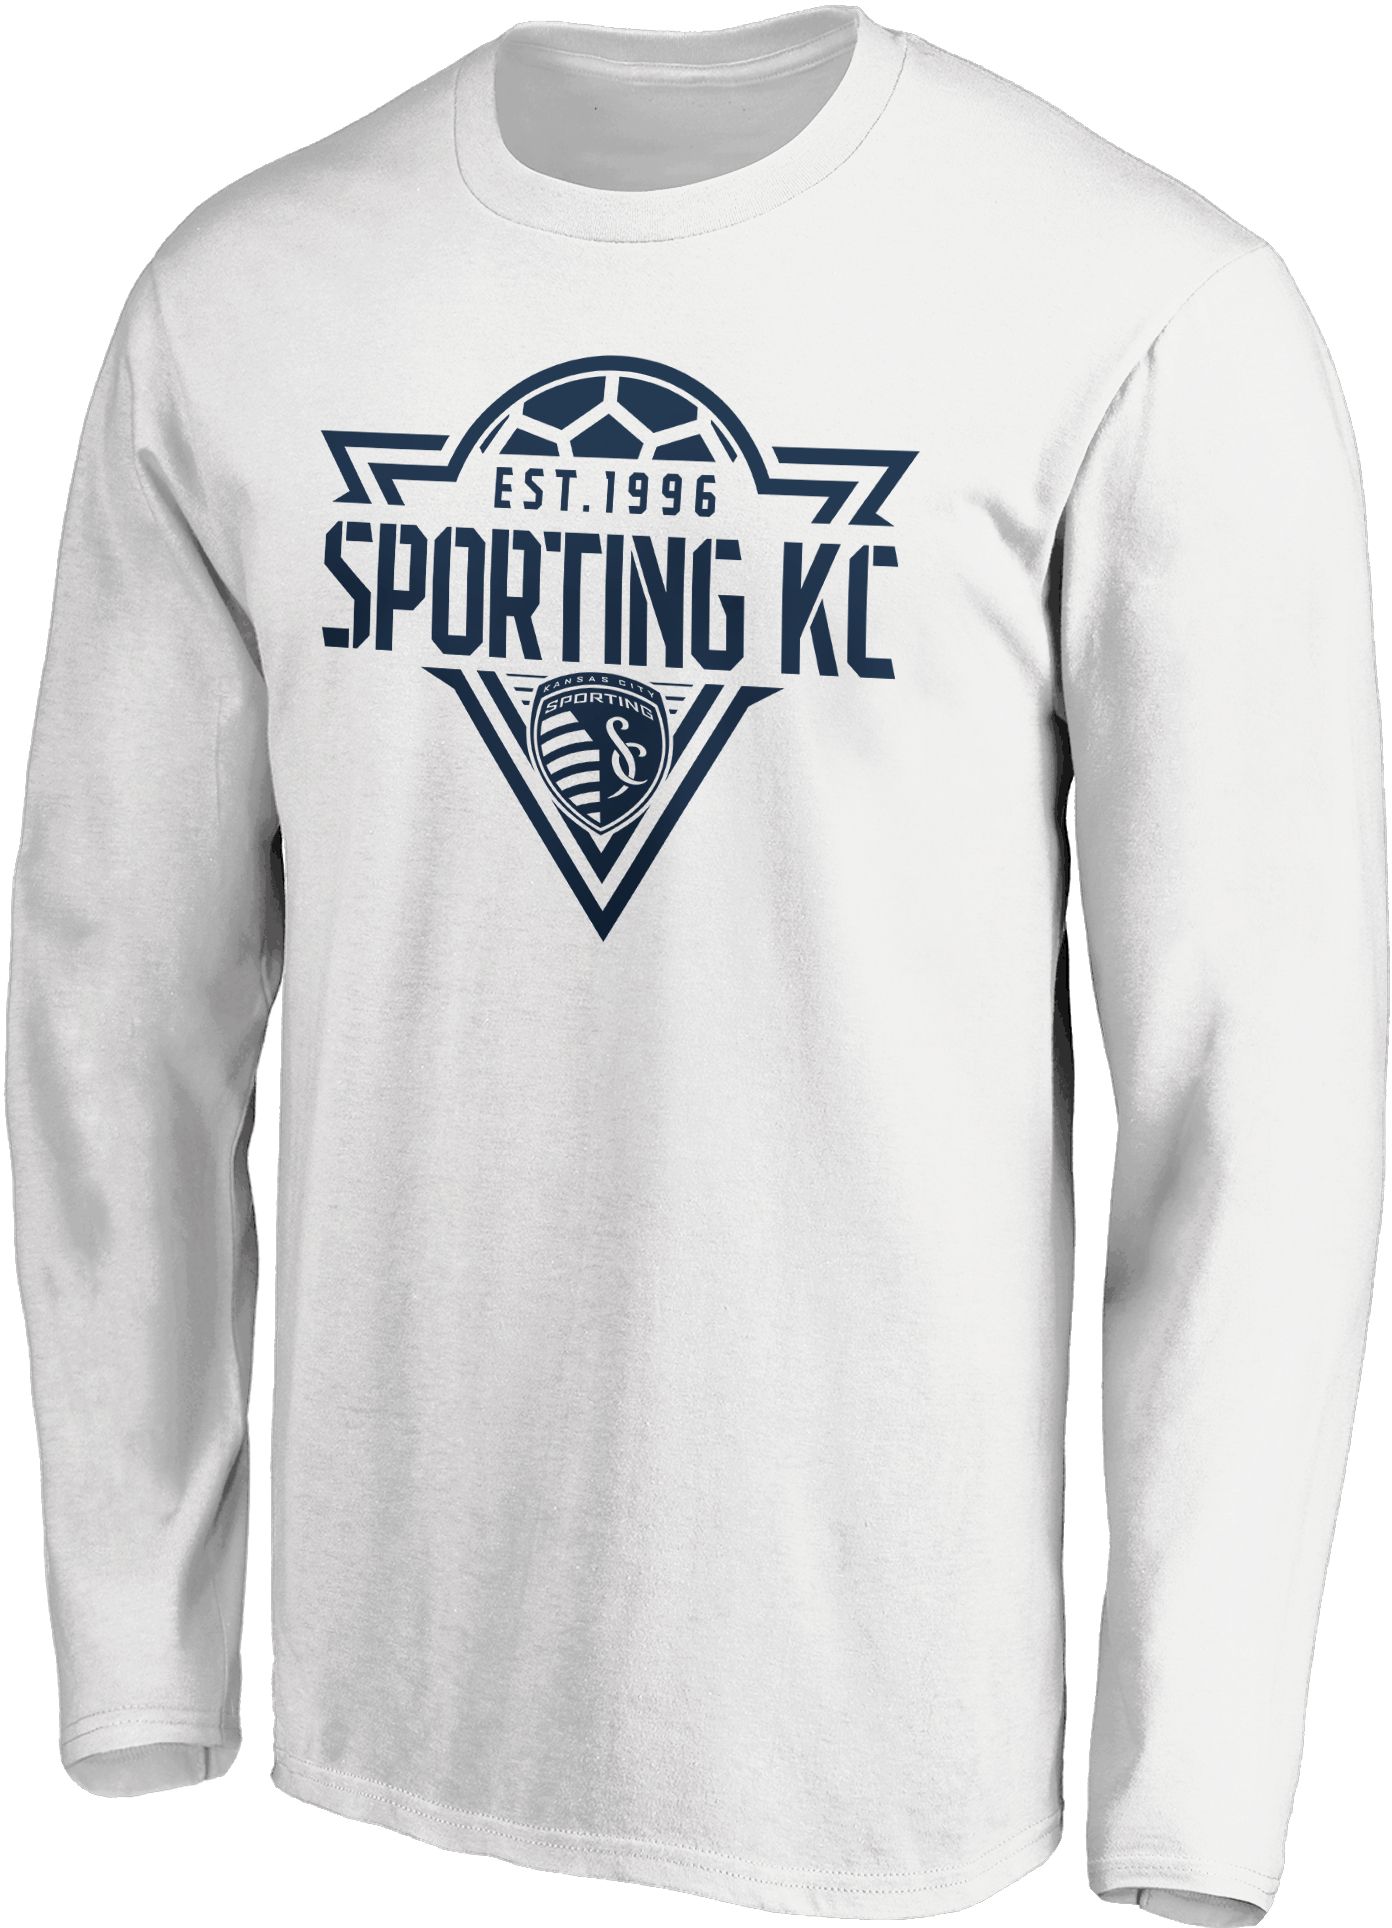 sporting kc shirt